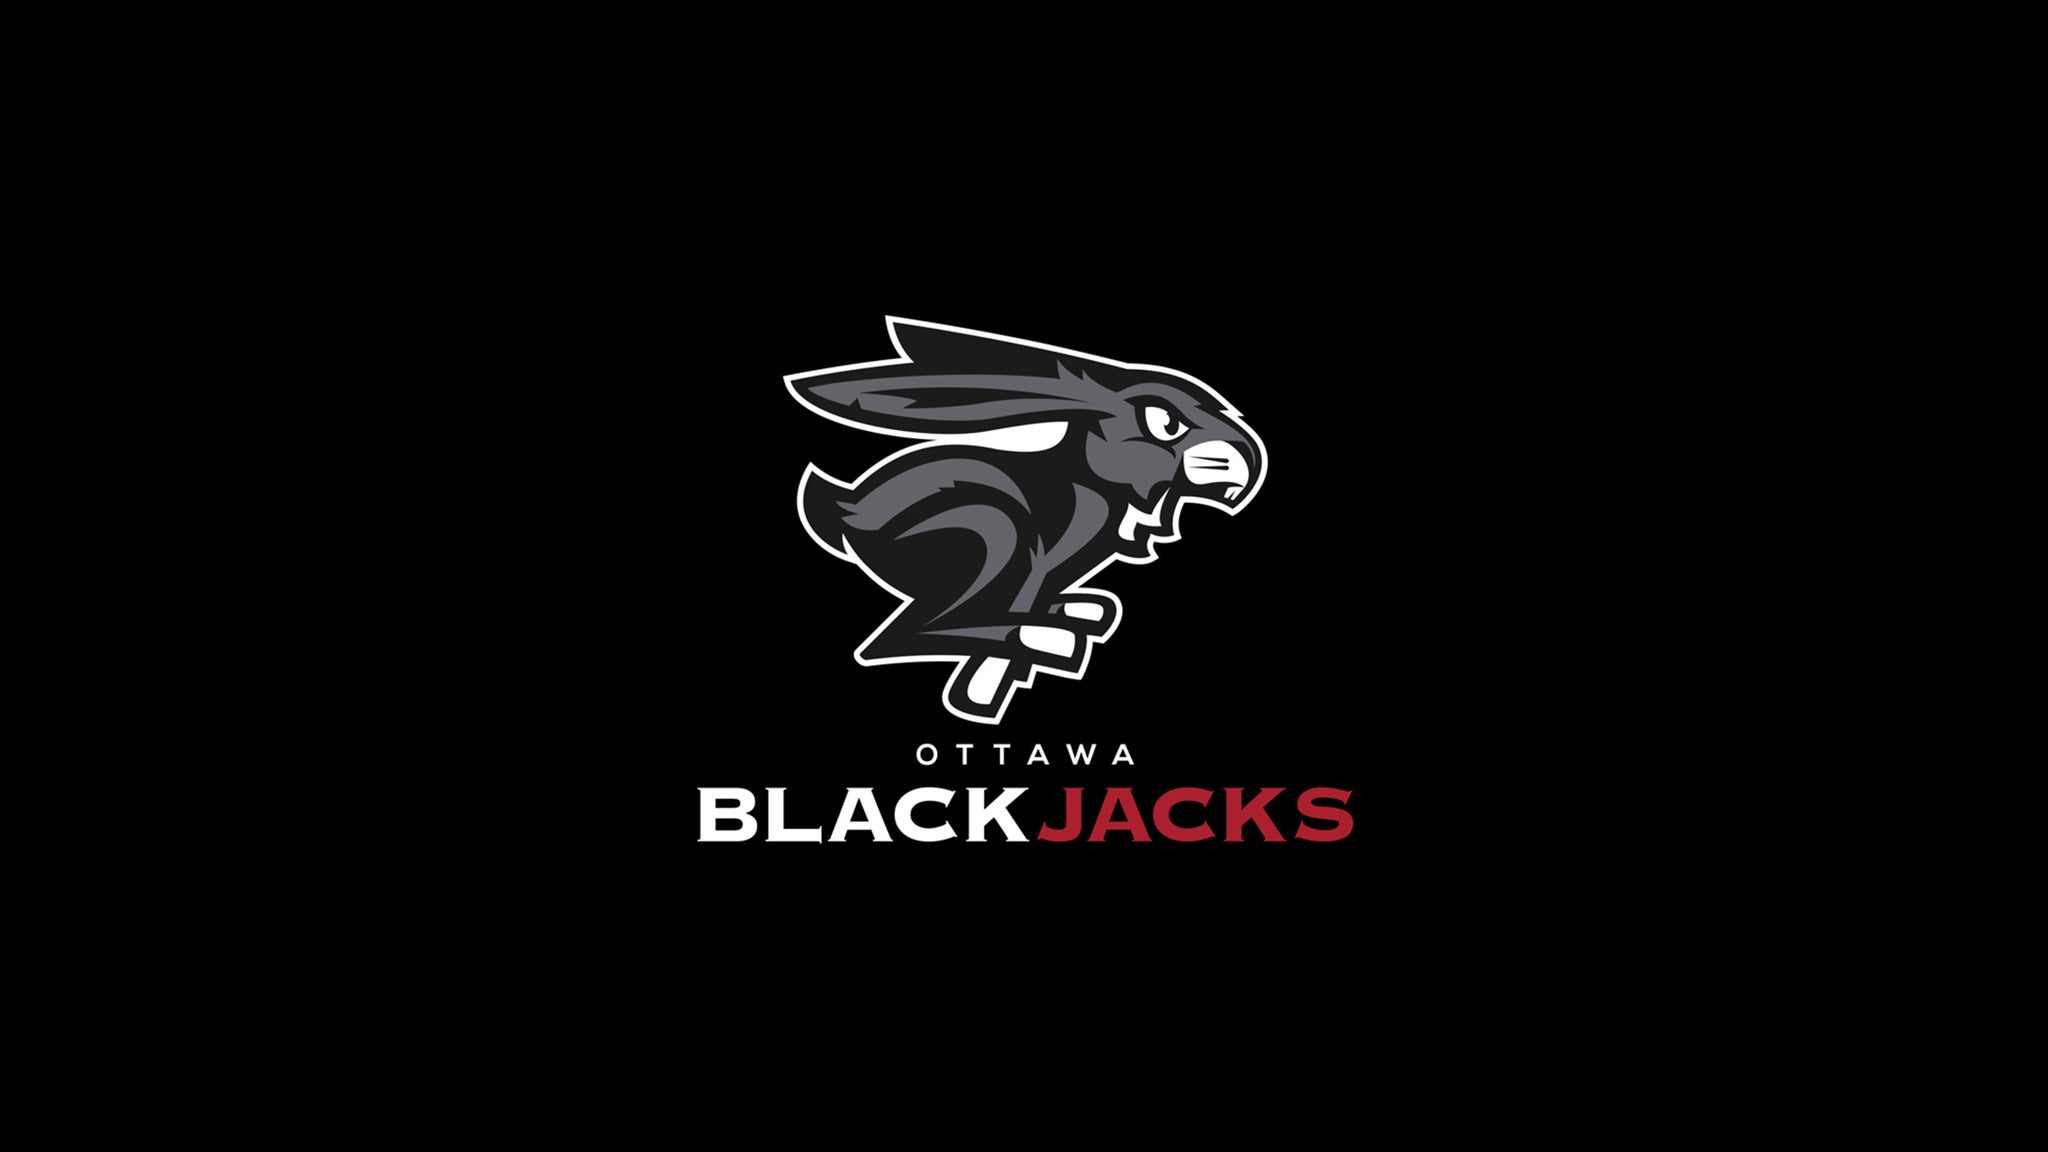 Ottawa BlackJacks vs. Niagara River Lions in Ottawa promo photo for Exclusive presale offer code